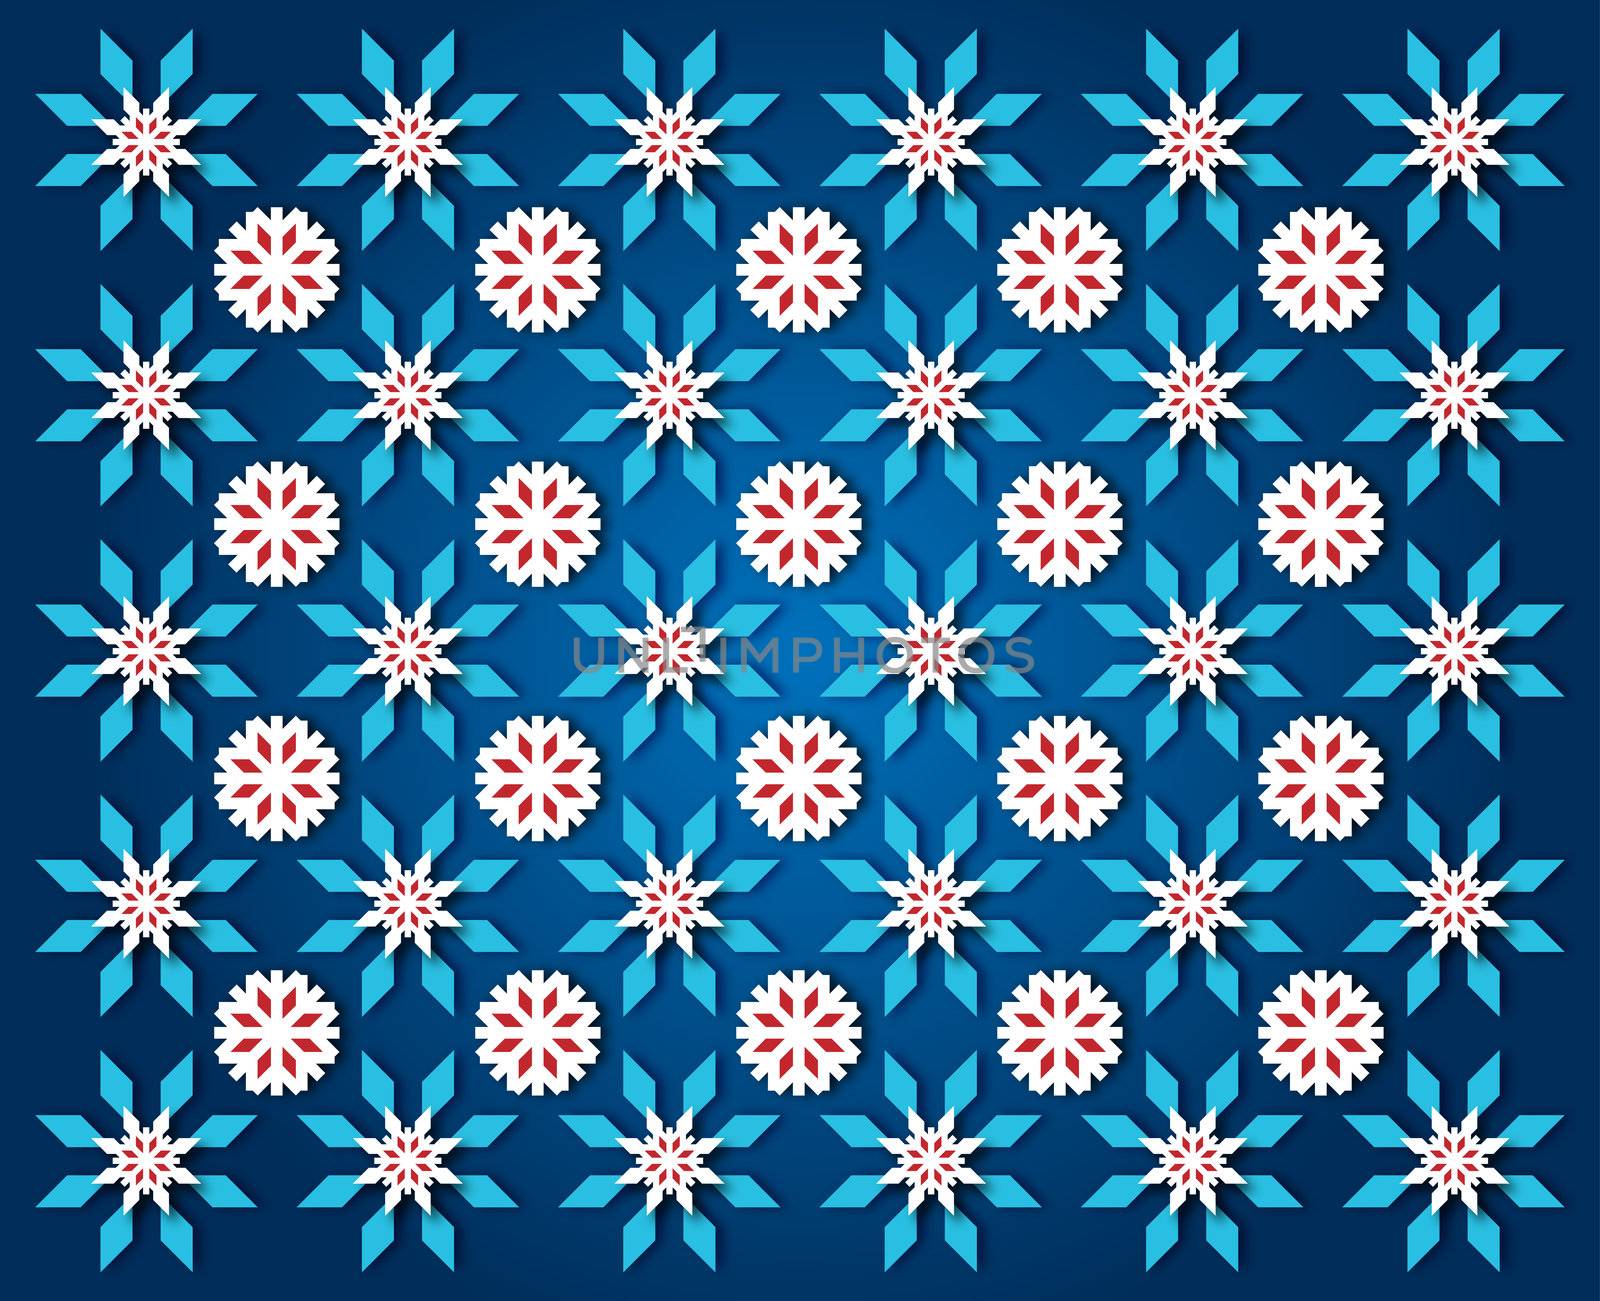 wallpaper simple white snowflakes on dark blue background